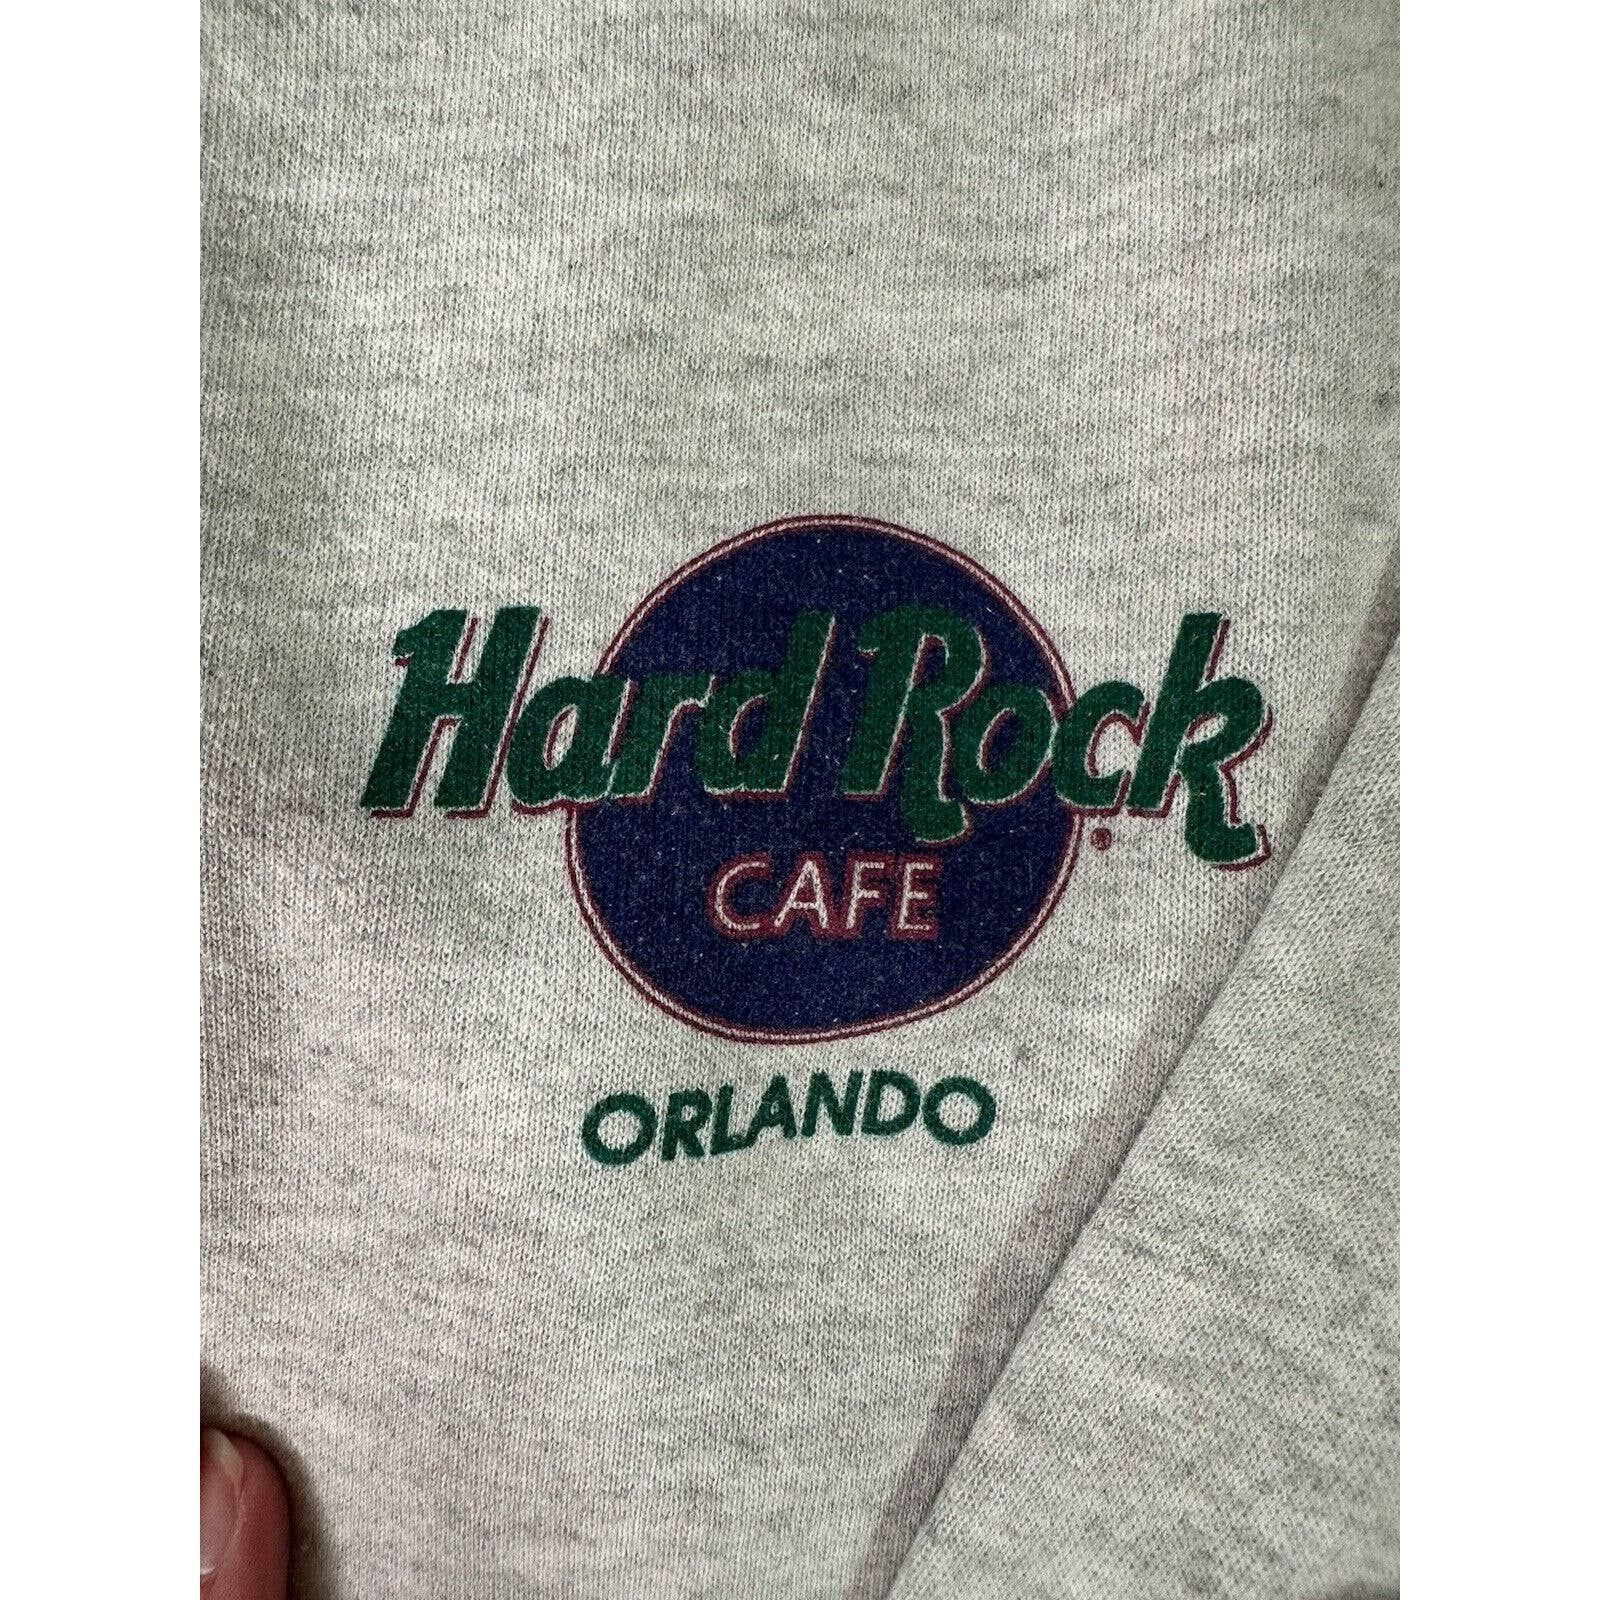 Hard Rock Cafe Vintage Hard Rock Cafe Orlando Crewneck Sweater Rock N’ Roll Size US S / EU 44-46 / 1 - 3 Thumbnail